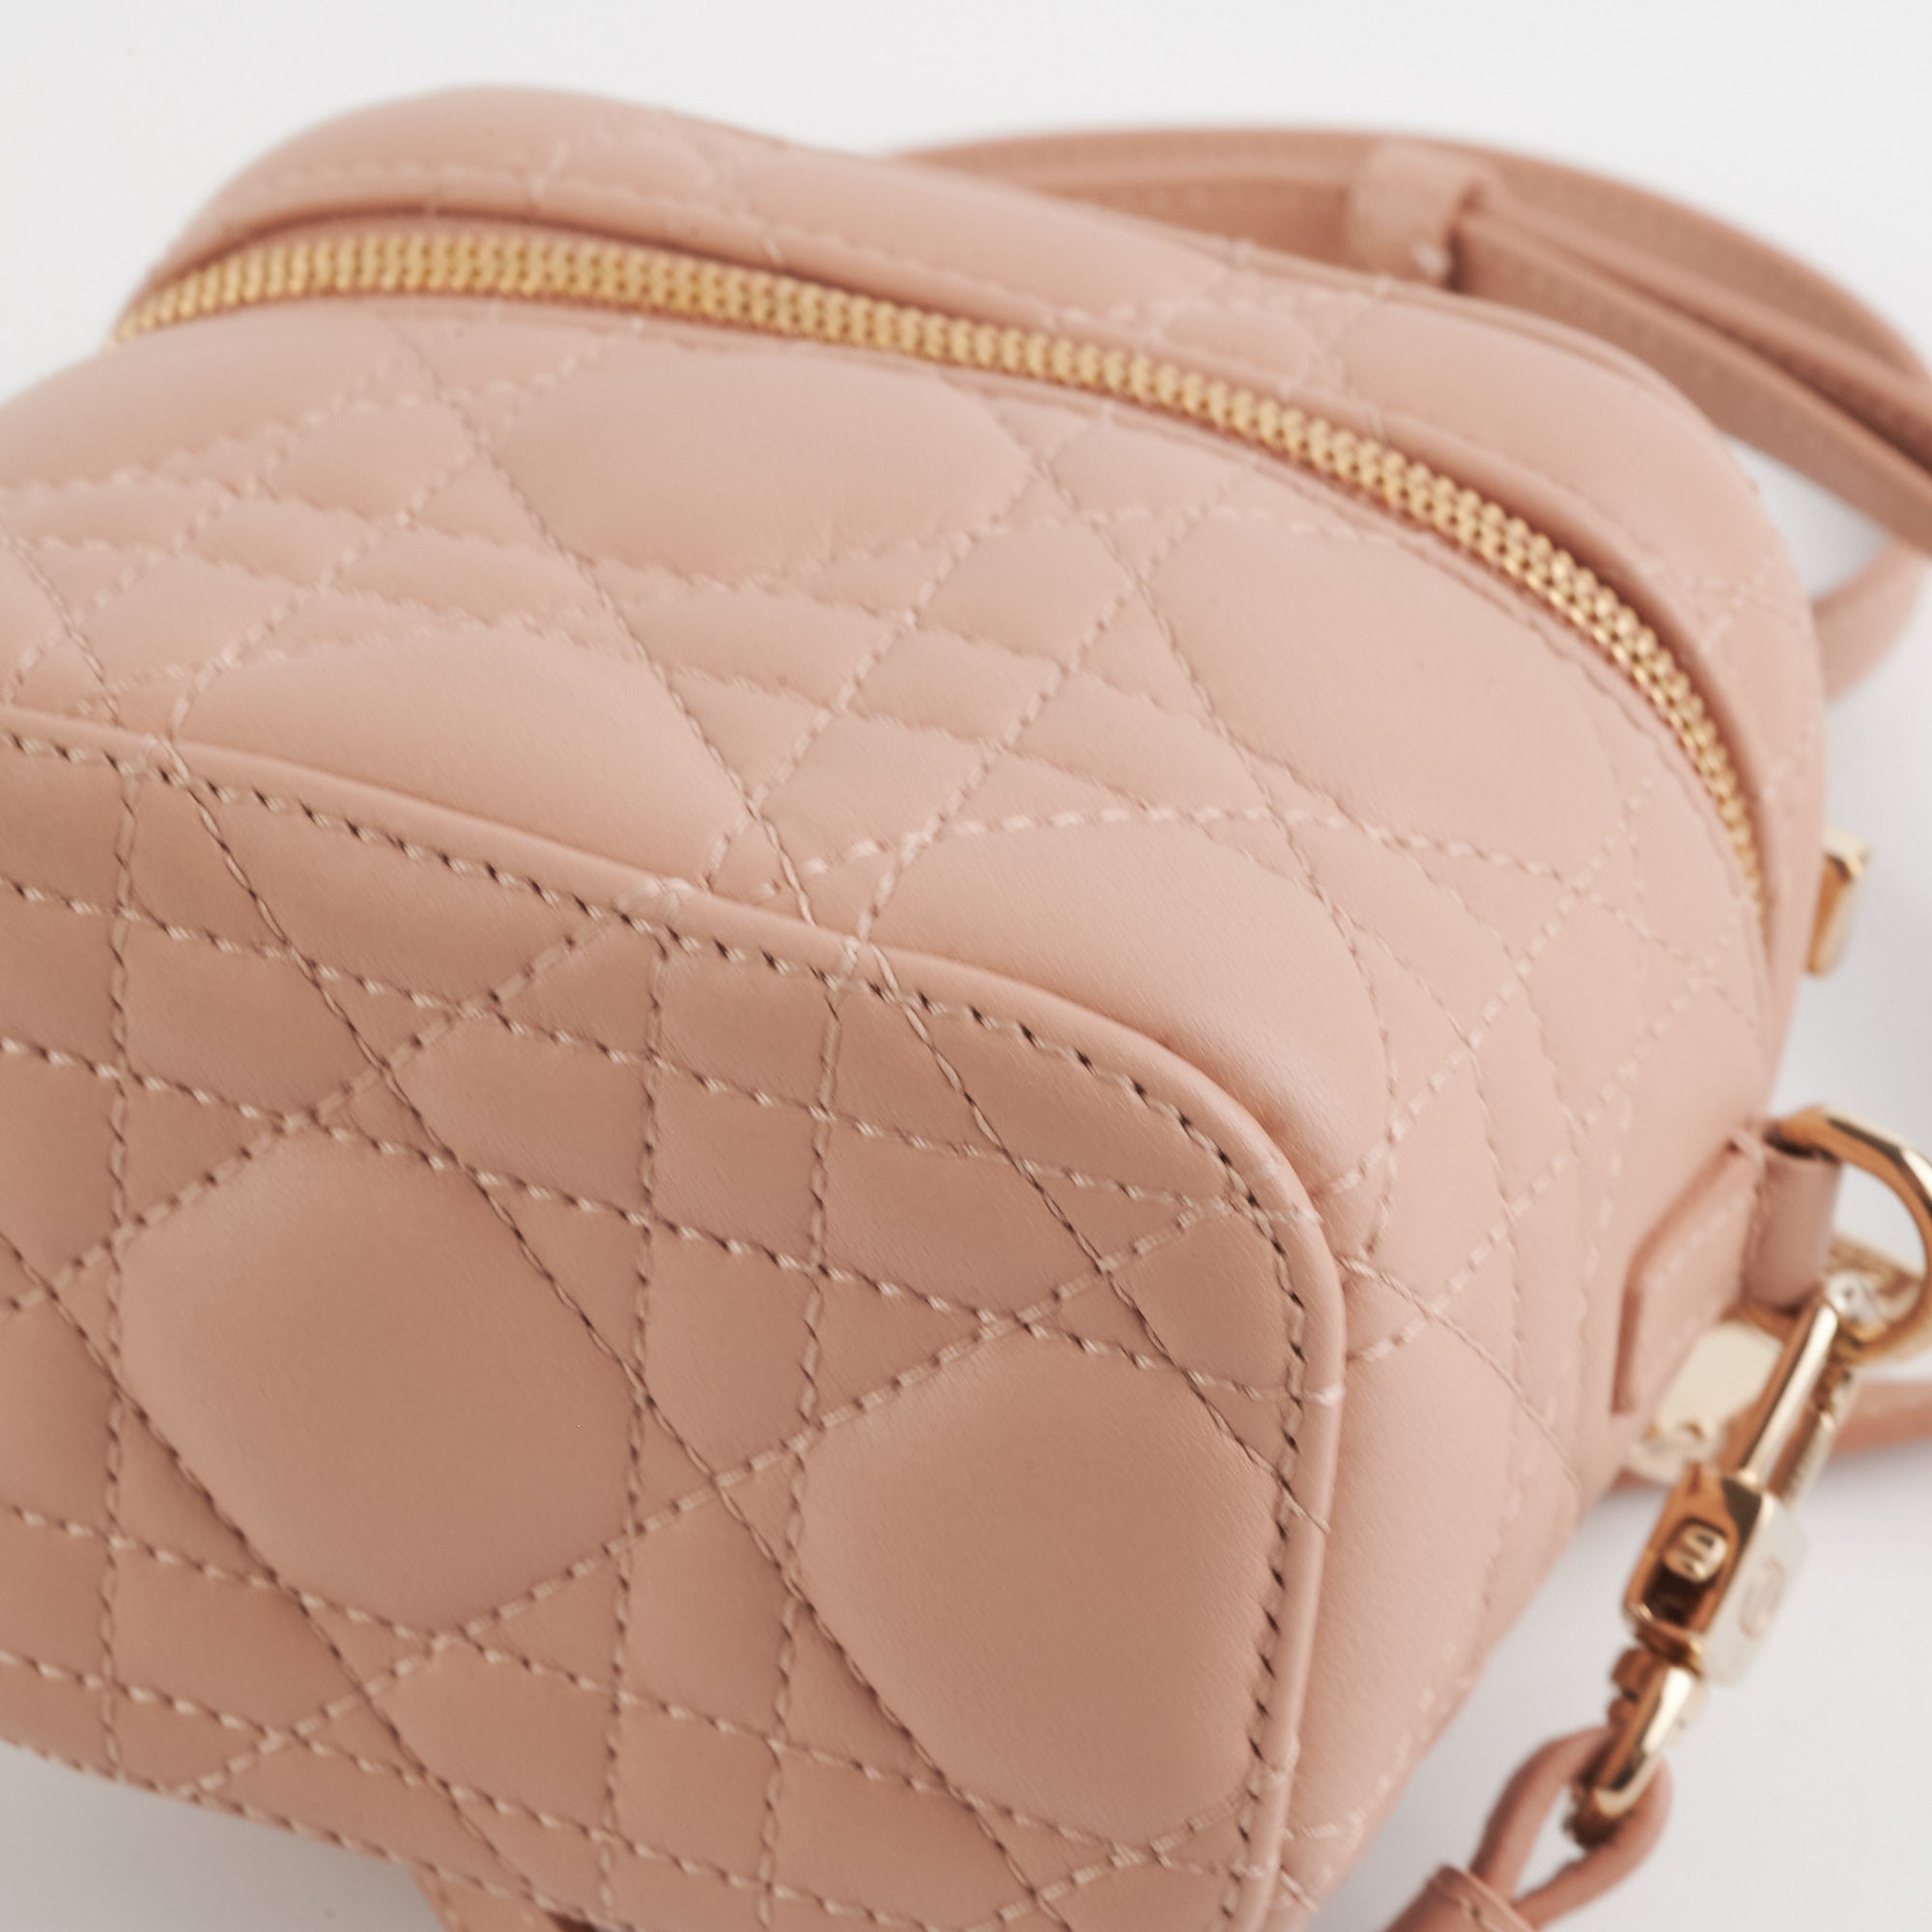 Bag Versus Lady Dior Bags  Mini versus Micro  Spotted Fashion